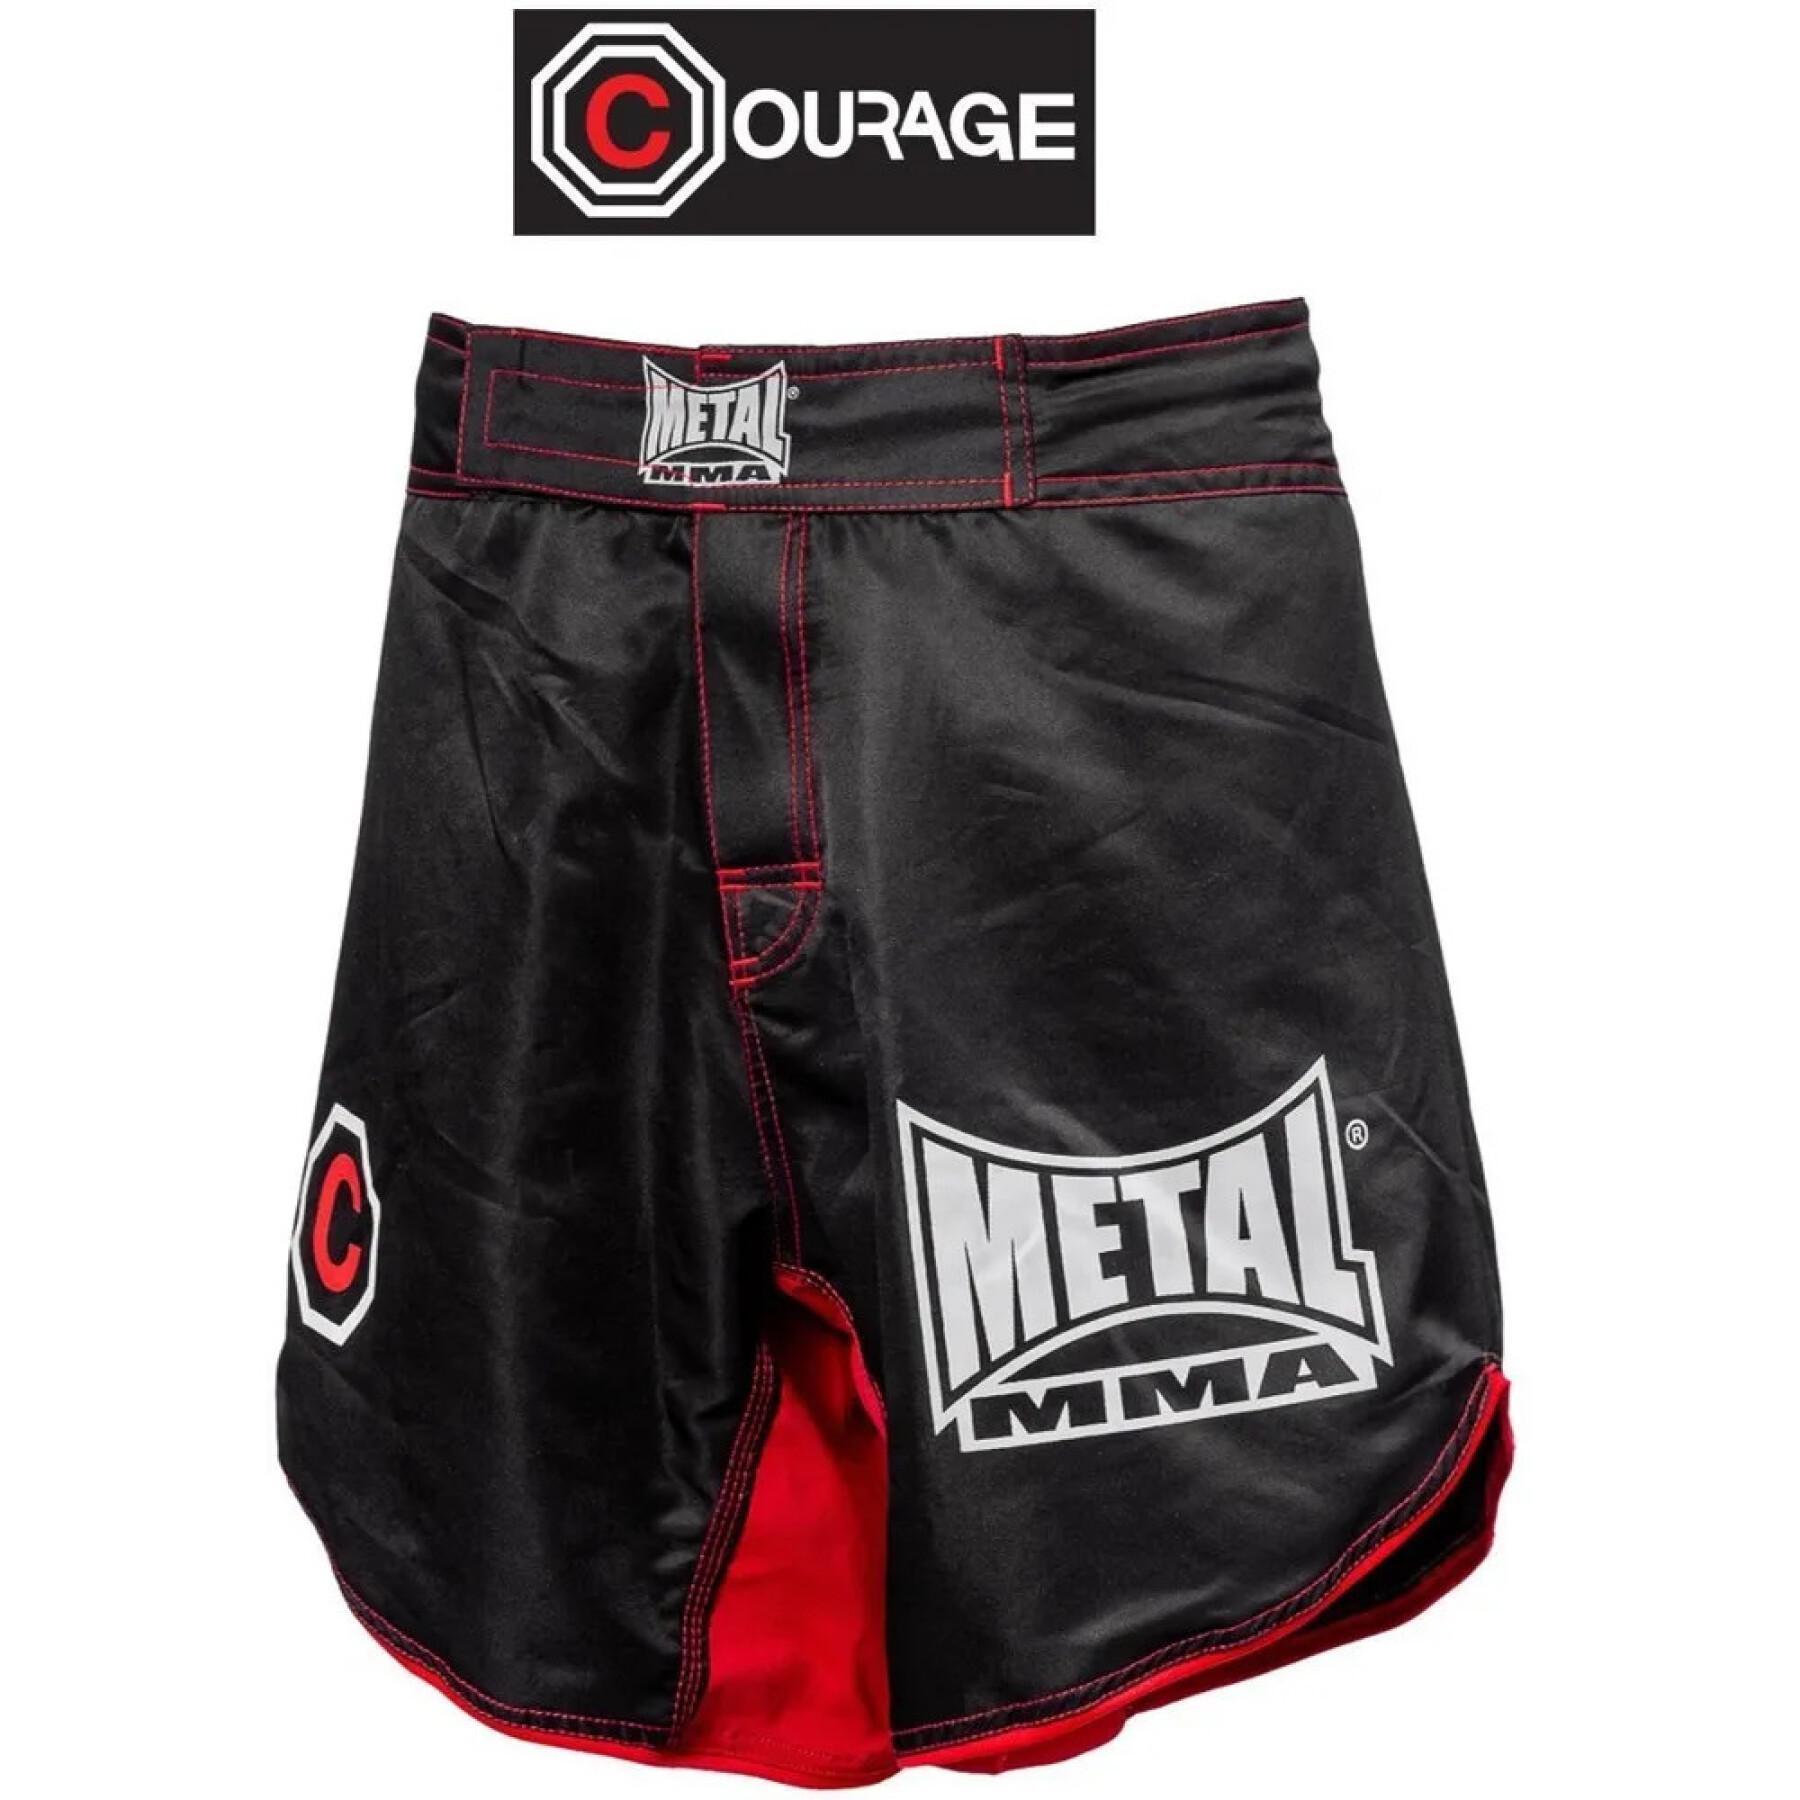 shorts de mma coraje Metal Boxe